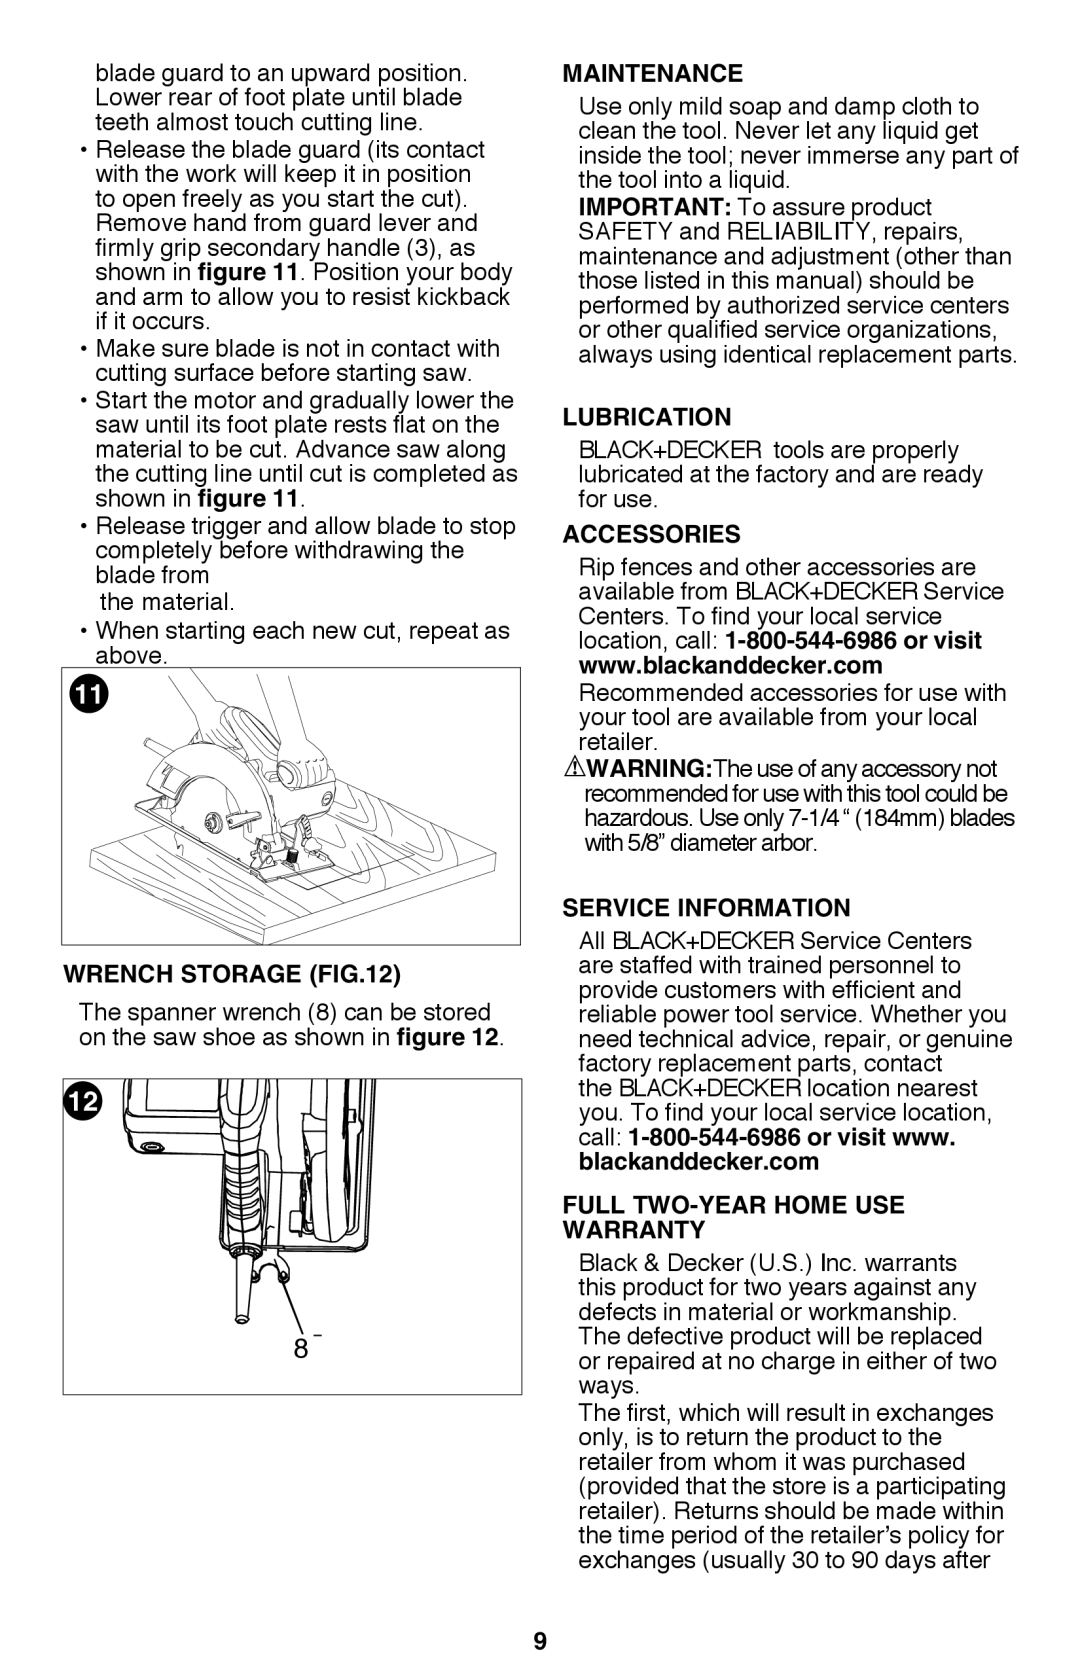 Black & Decker CS1015 instruction manual wrench storage, Maintenance, Lubrication, Accessories, Service Information 